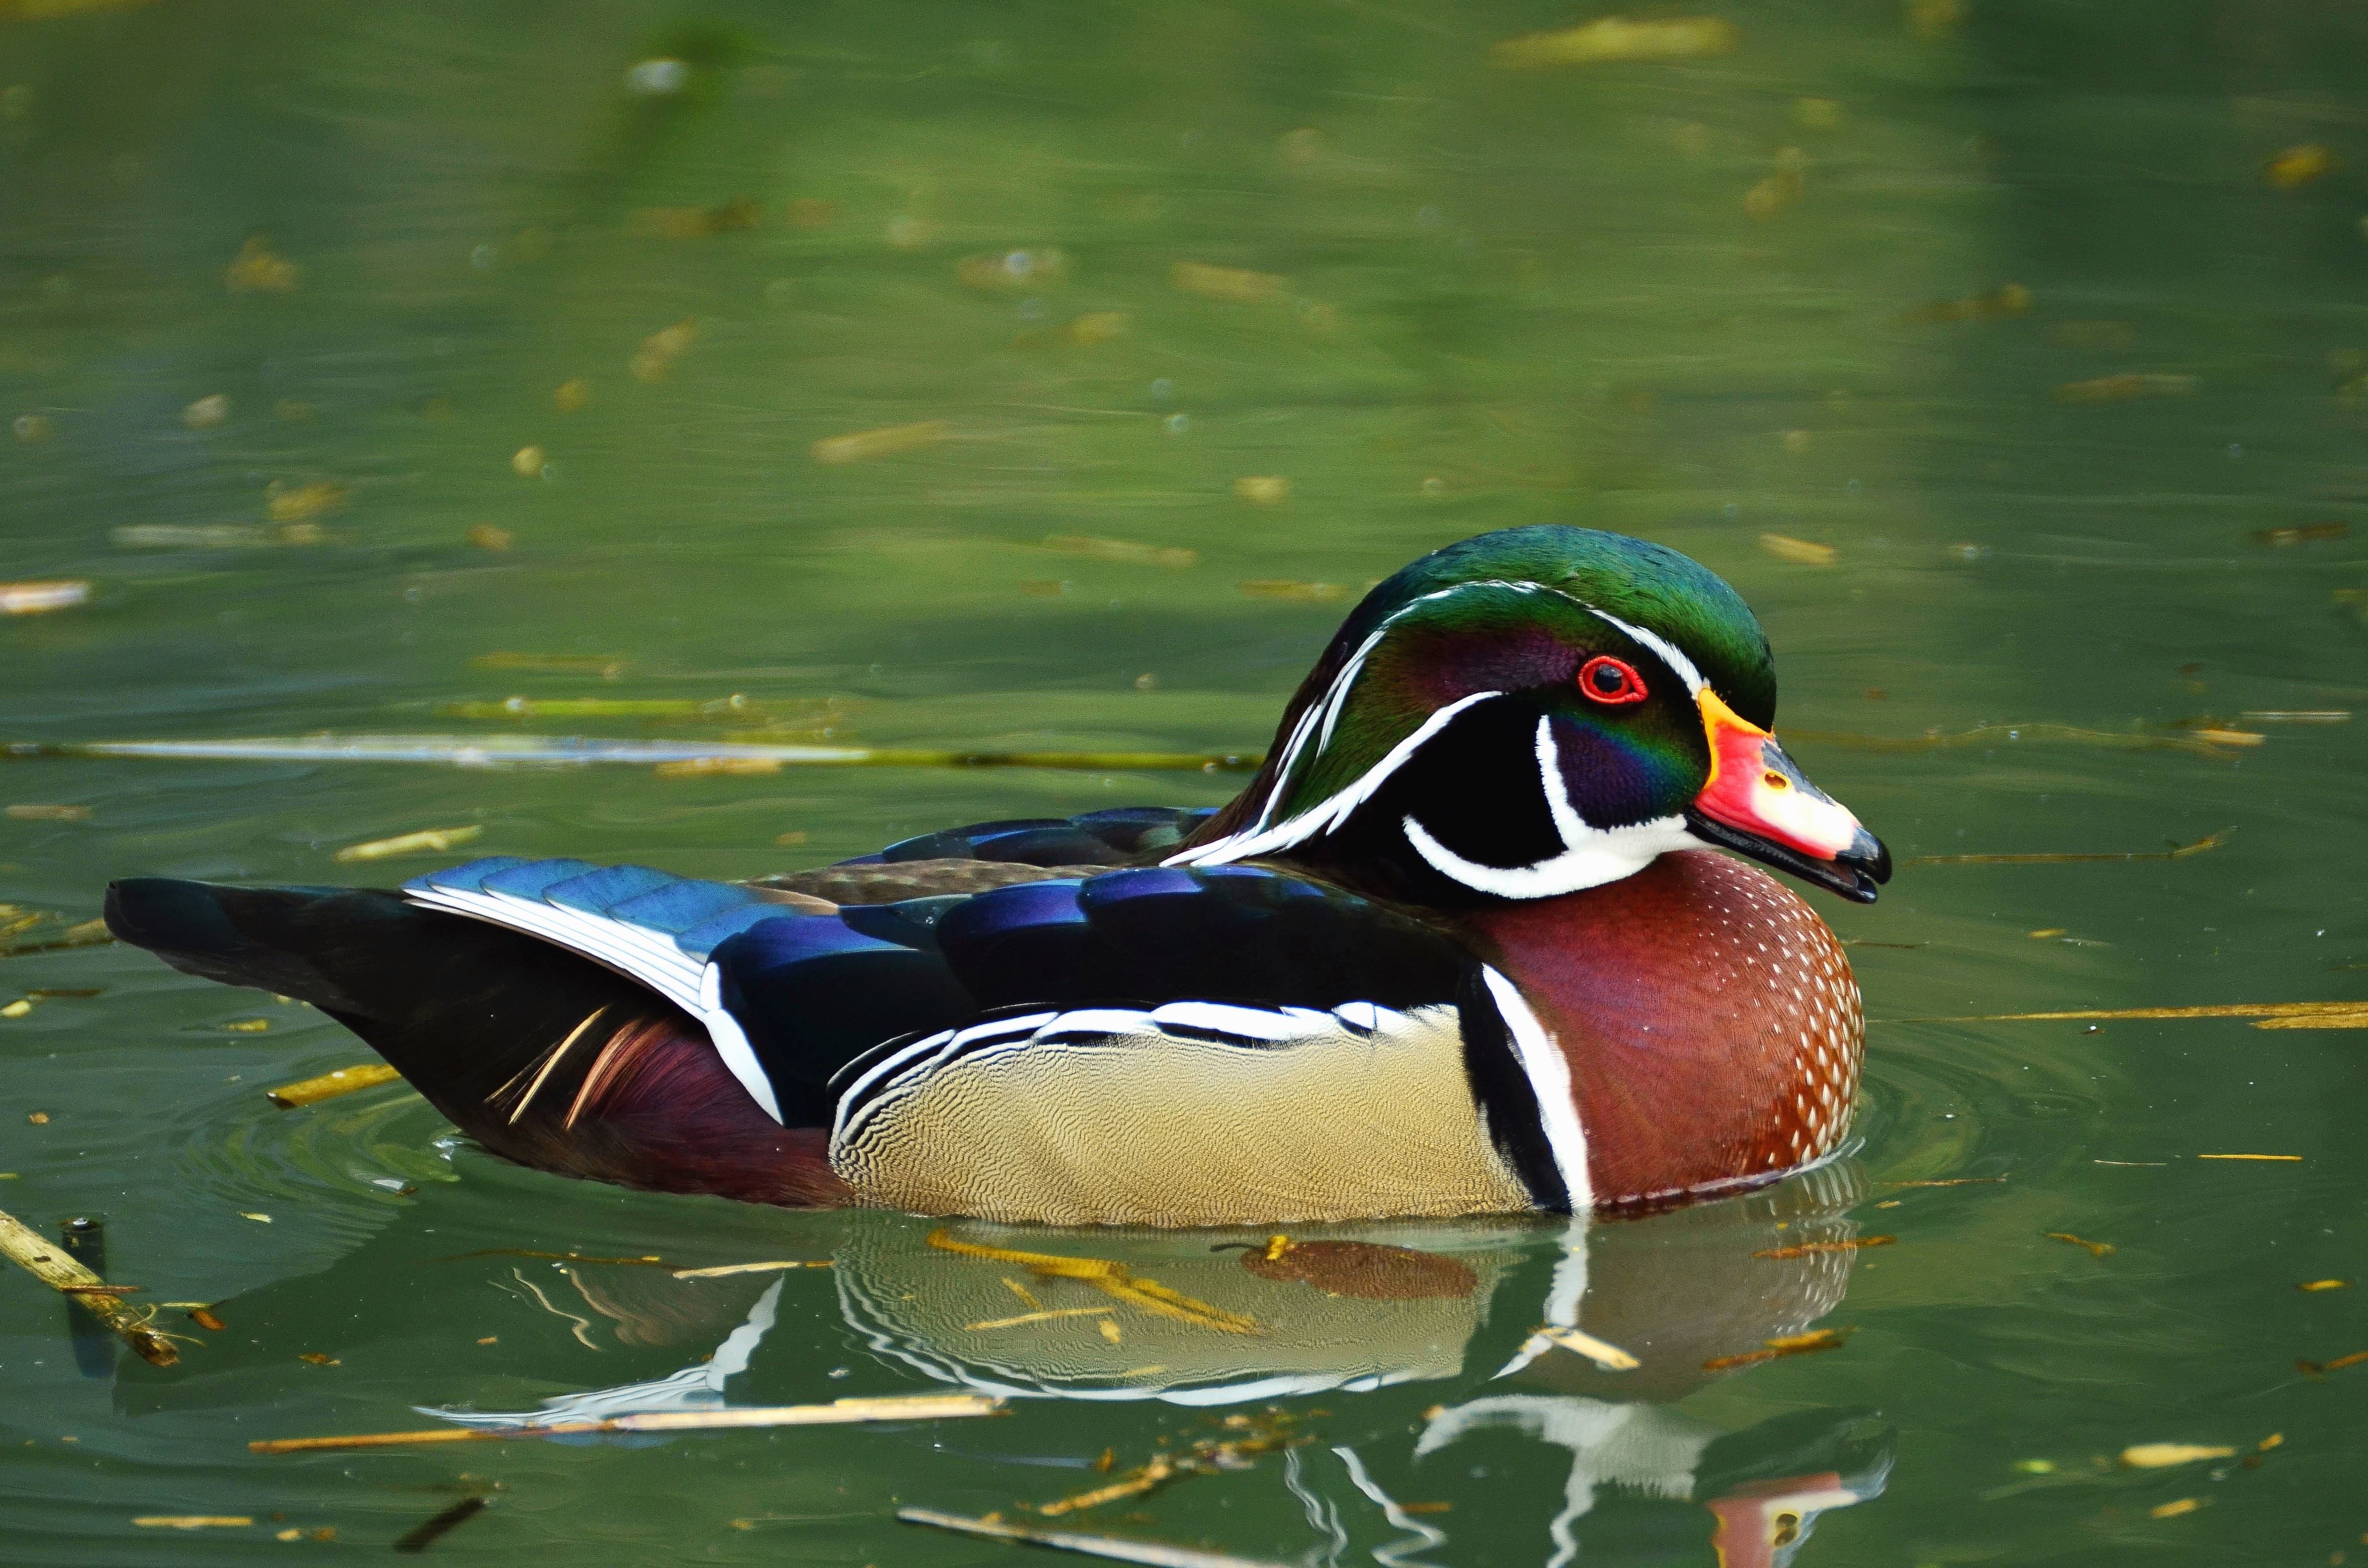 Free picture: bird, duck, water, feathers, swimming, beak